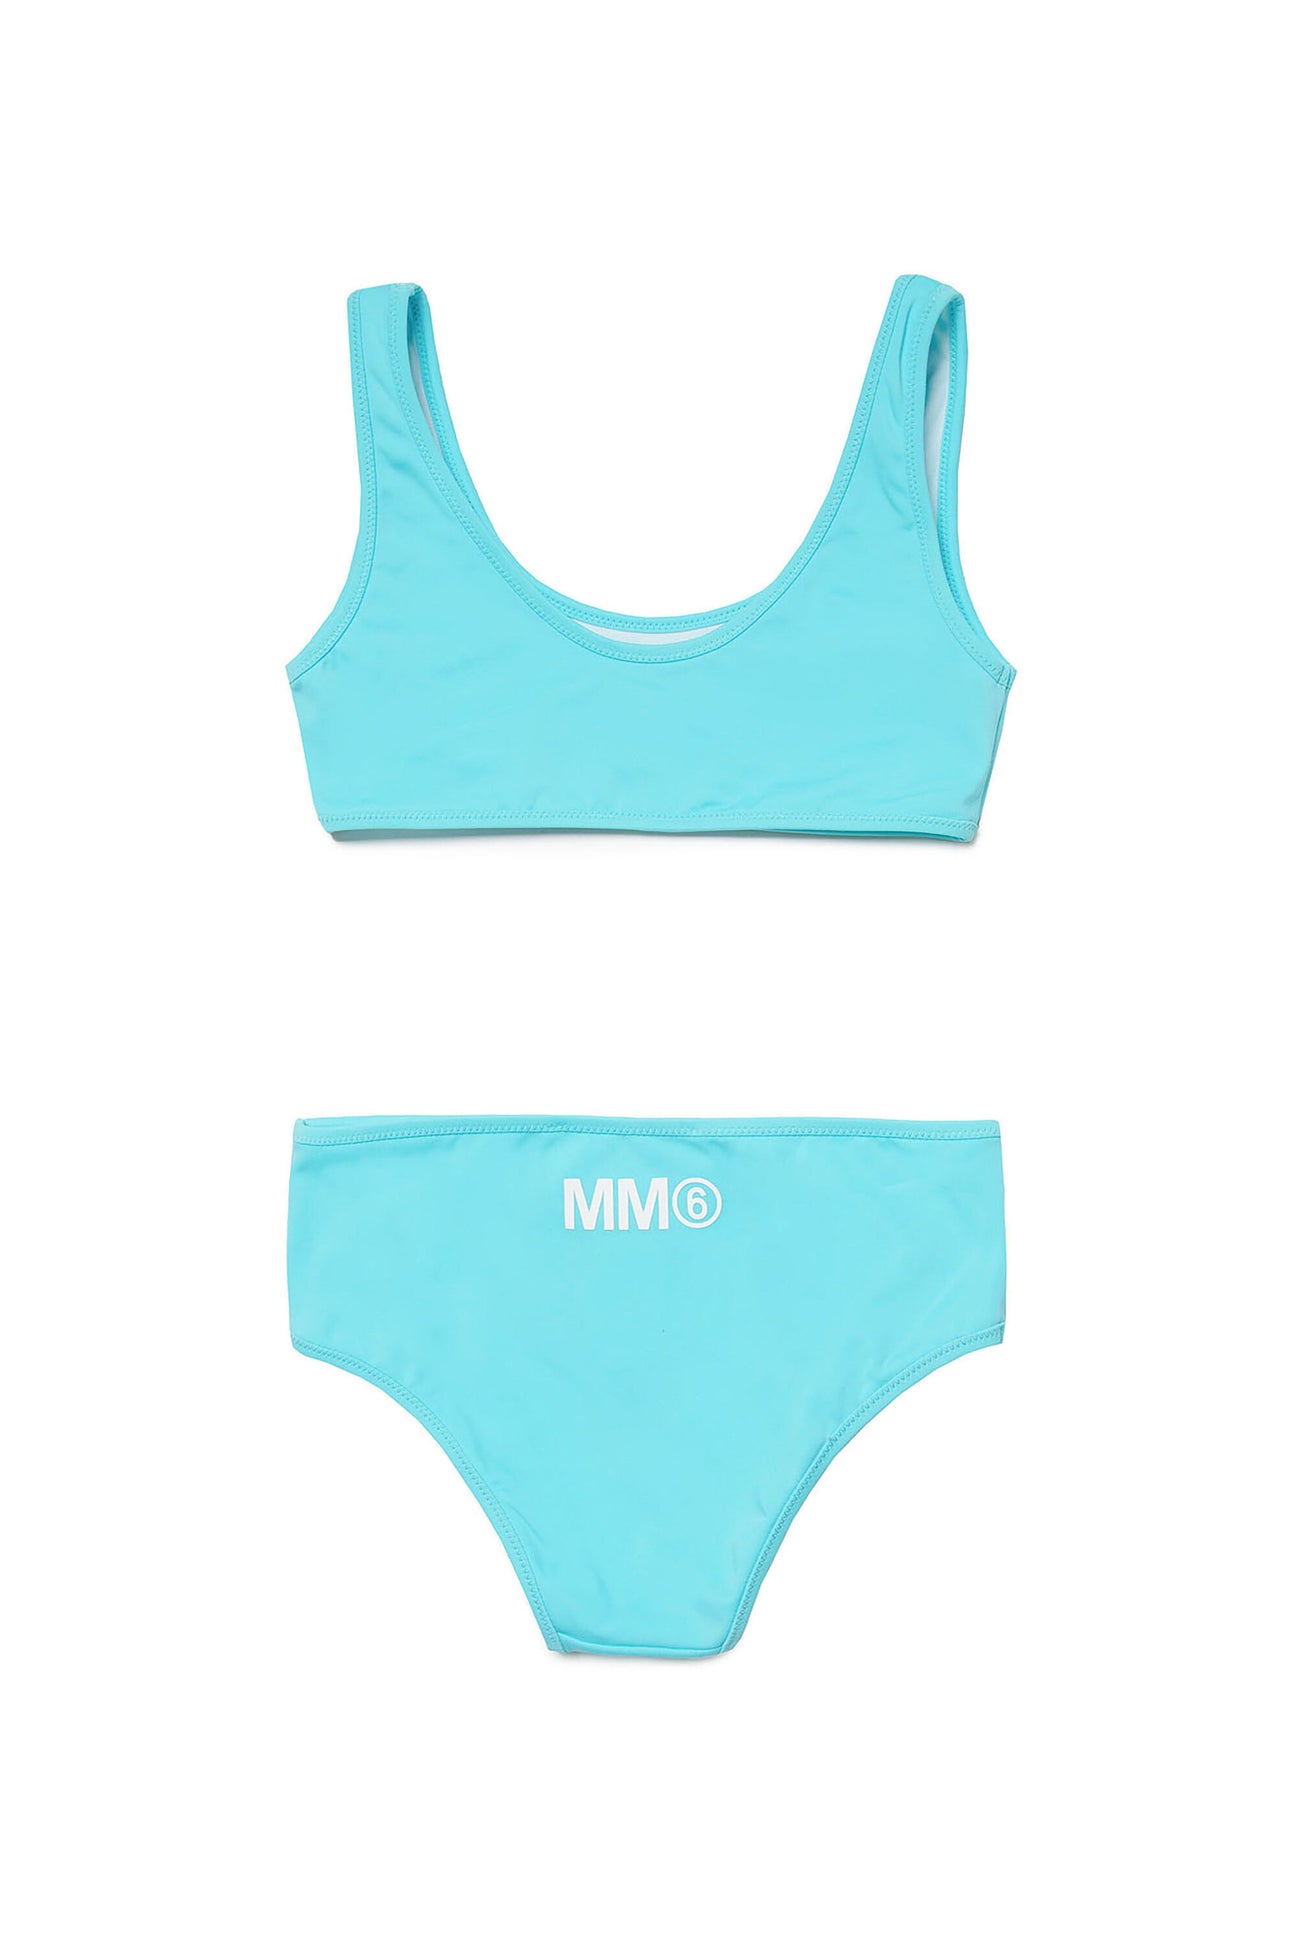 Lycra bikini swimsuit with MM6 logo Lycra bikini swimsuit with MM6 logo